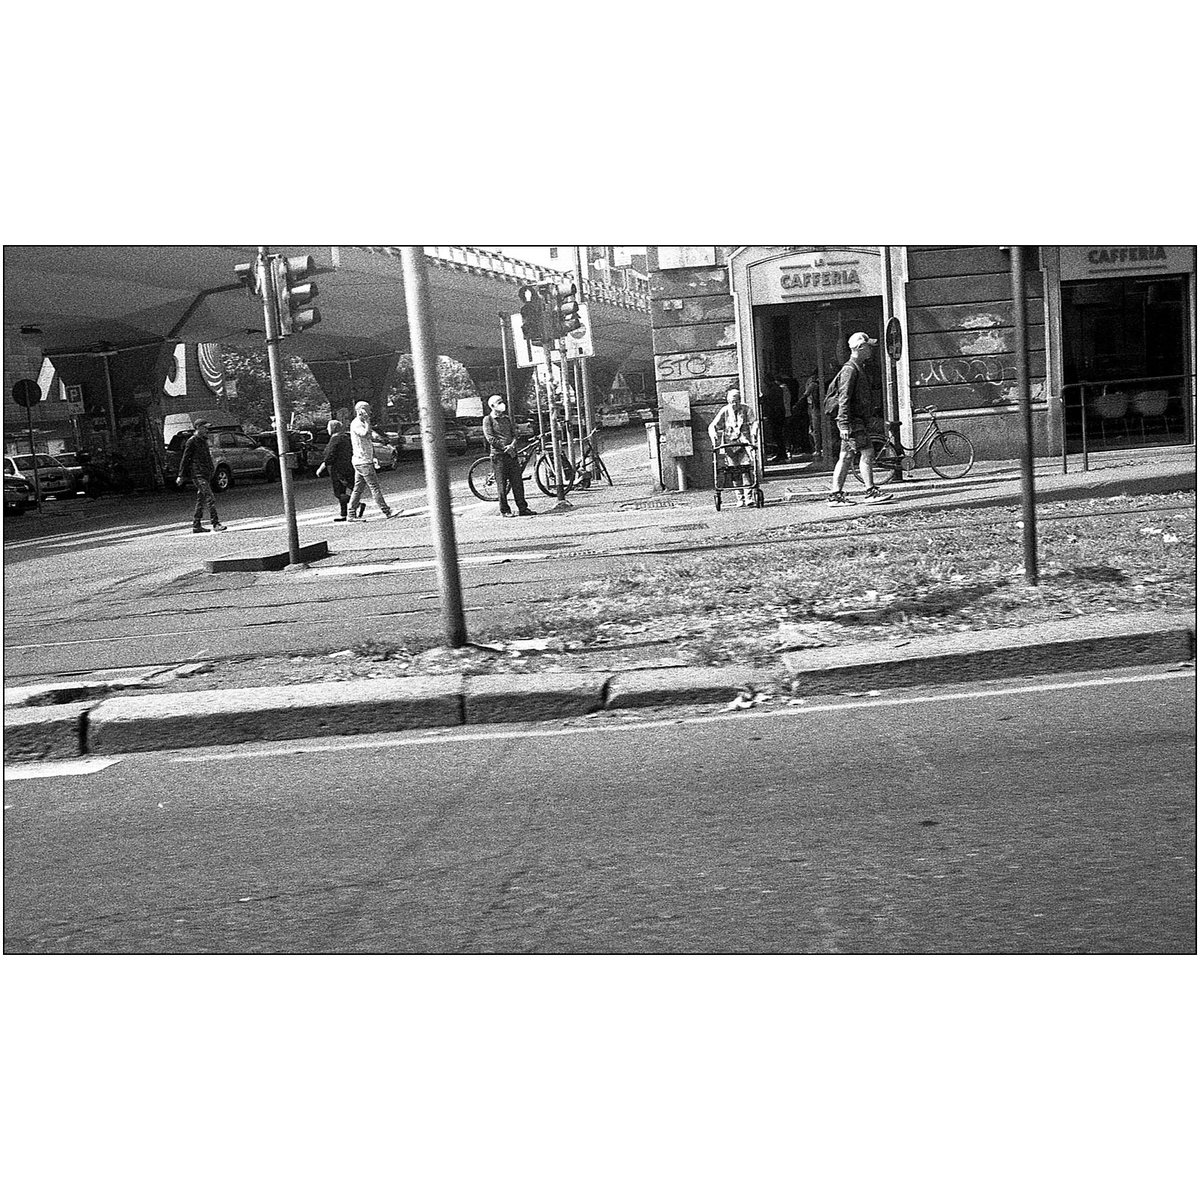 #streetphotography #rollei35s #filmisnotdead #filmphotography #bnwphotography #fotografiaanalogica #fotografiaanaloga #blancoynegro #milano #urbanlandscape #paesaggioitaliano #paesaggiourbano #rodinal #selfdev #vialecertosa